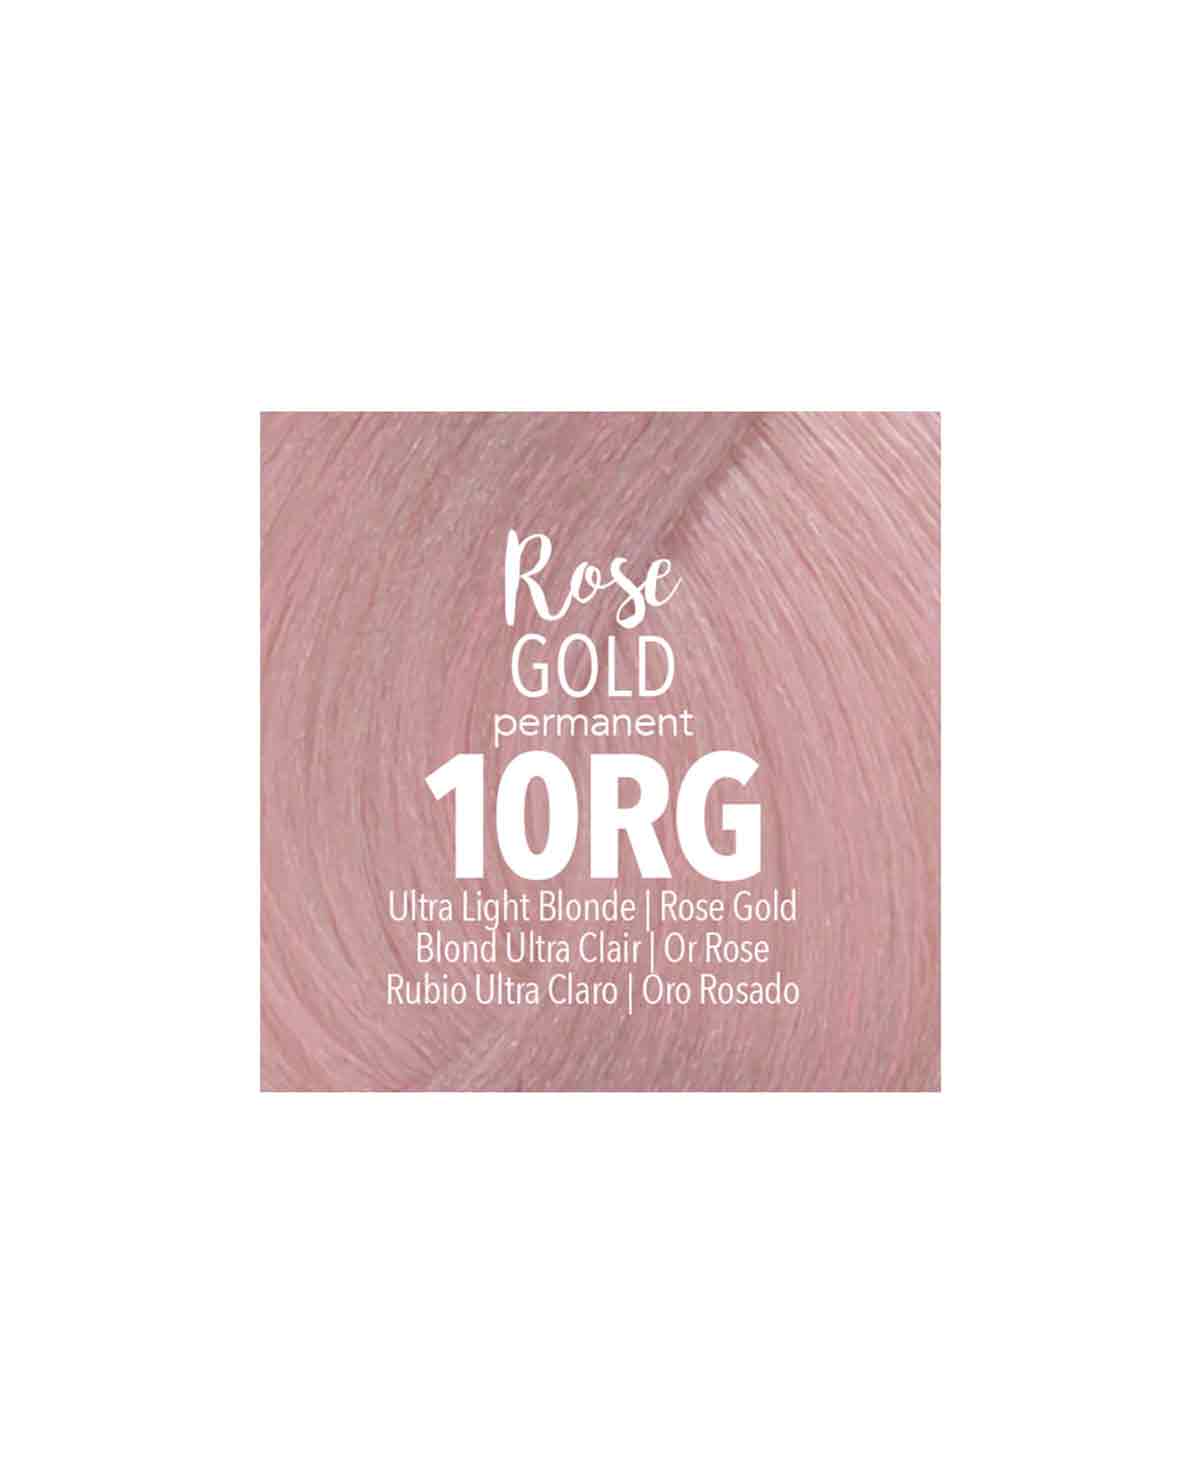 Mydentity - PERM. 10RG Ultra Light Blonde Rose Gold